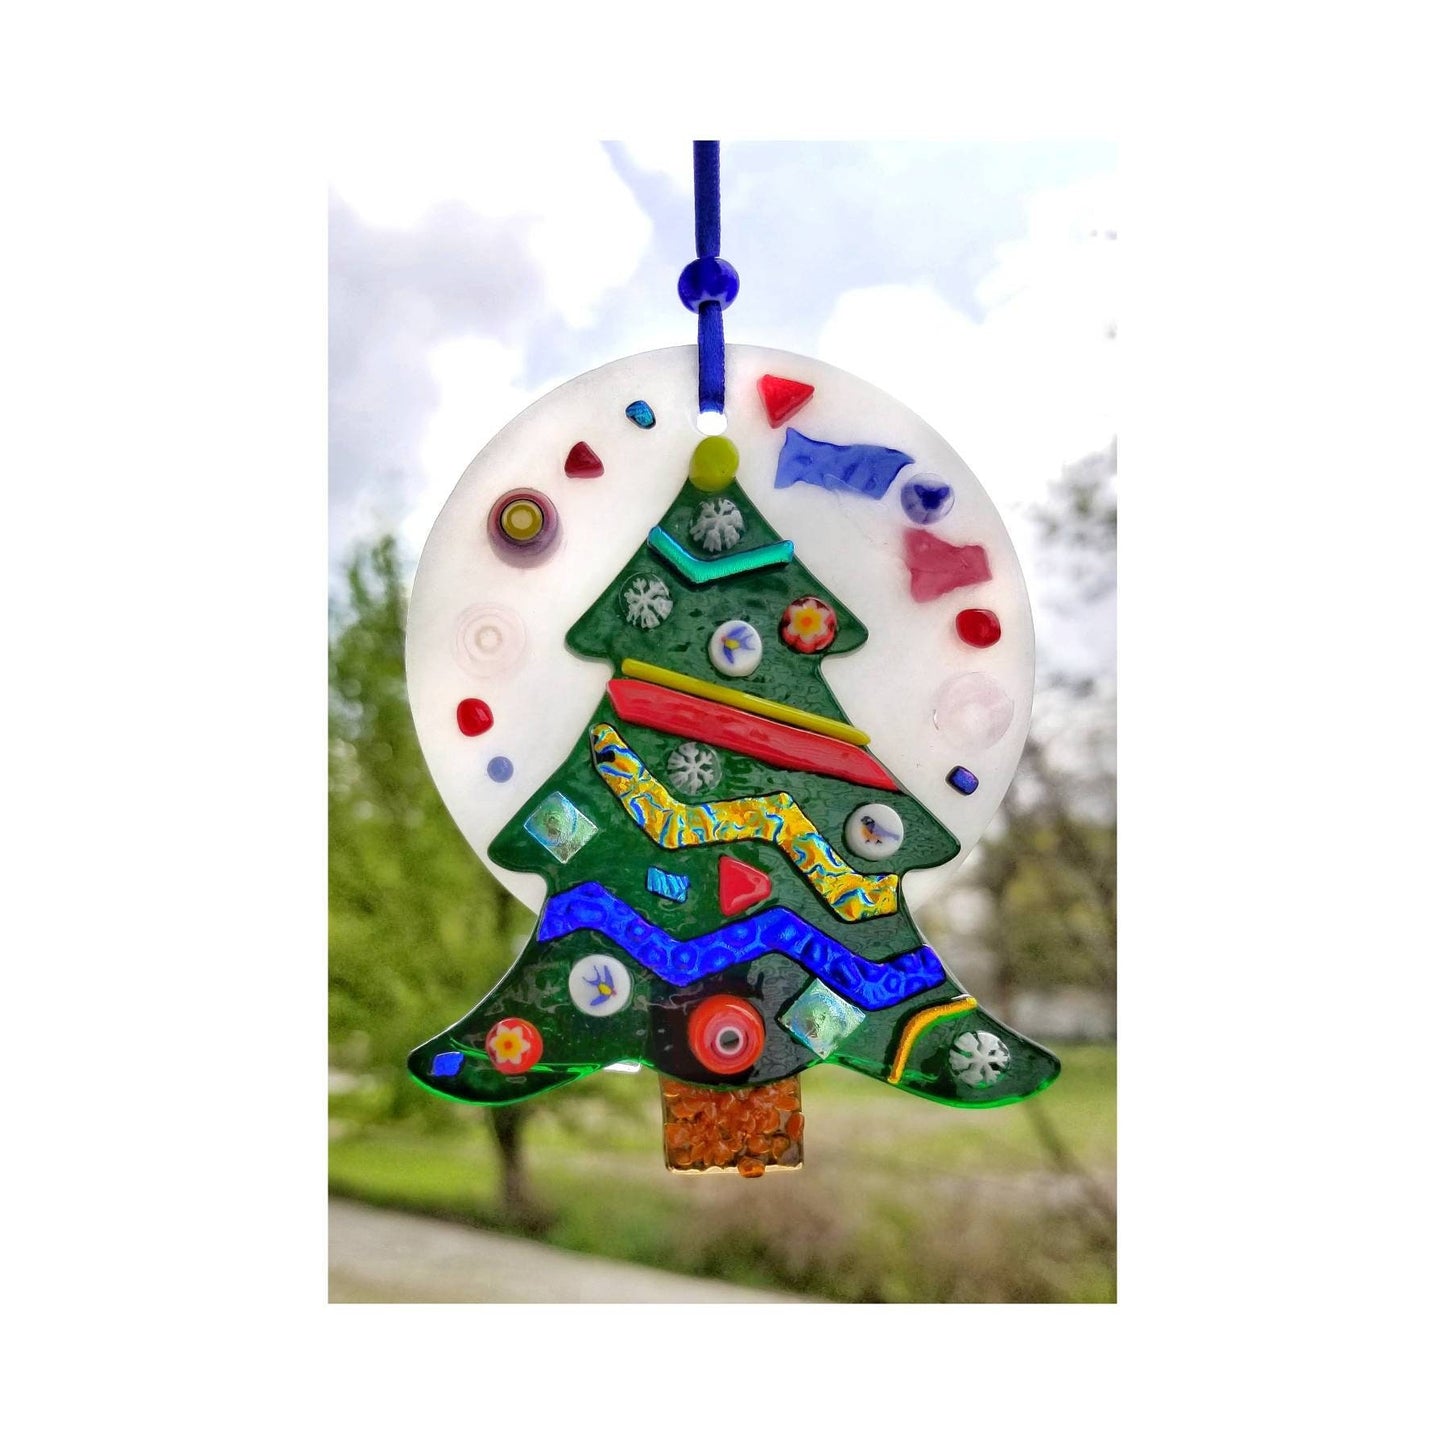 Fused Glass Tree suncatcher. Red, white, blue, dark green. Dichroic wavy glass. Evergreen Spruce tree ornament.